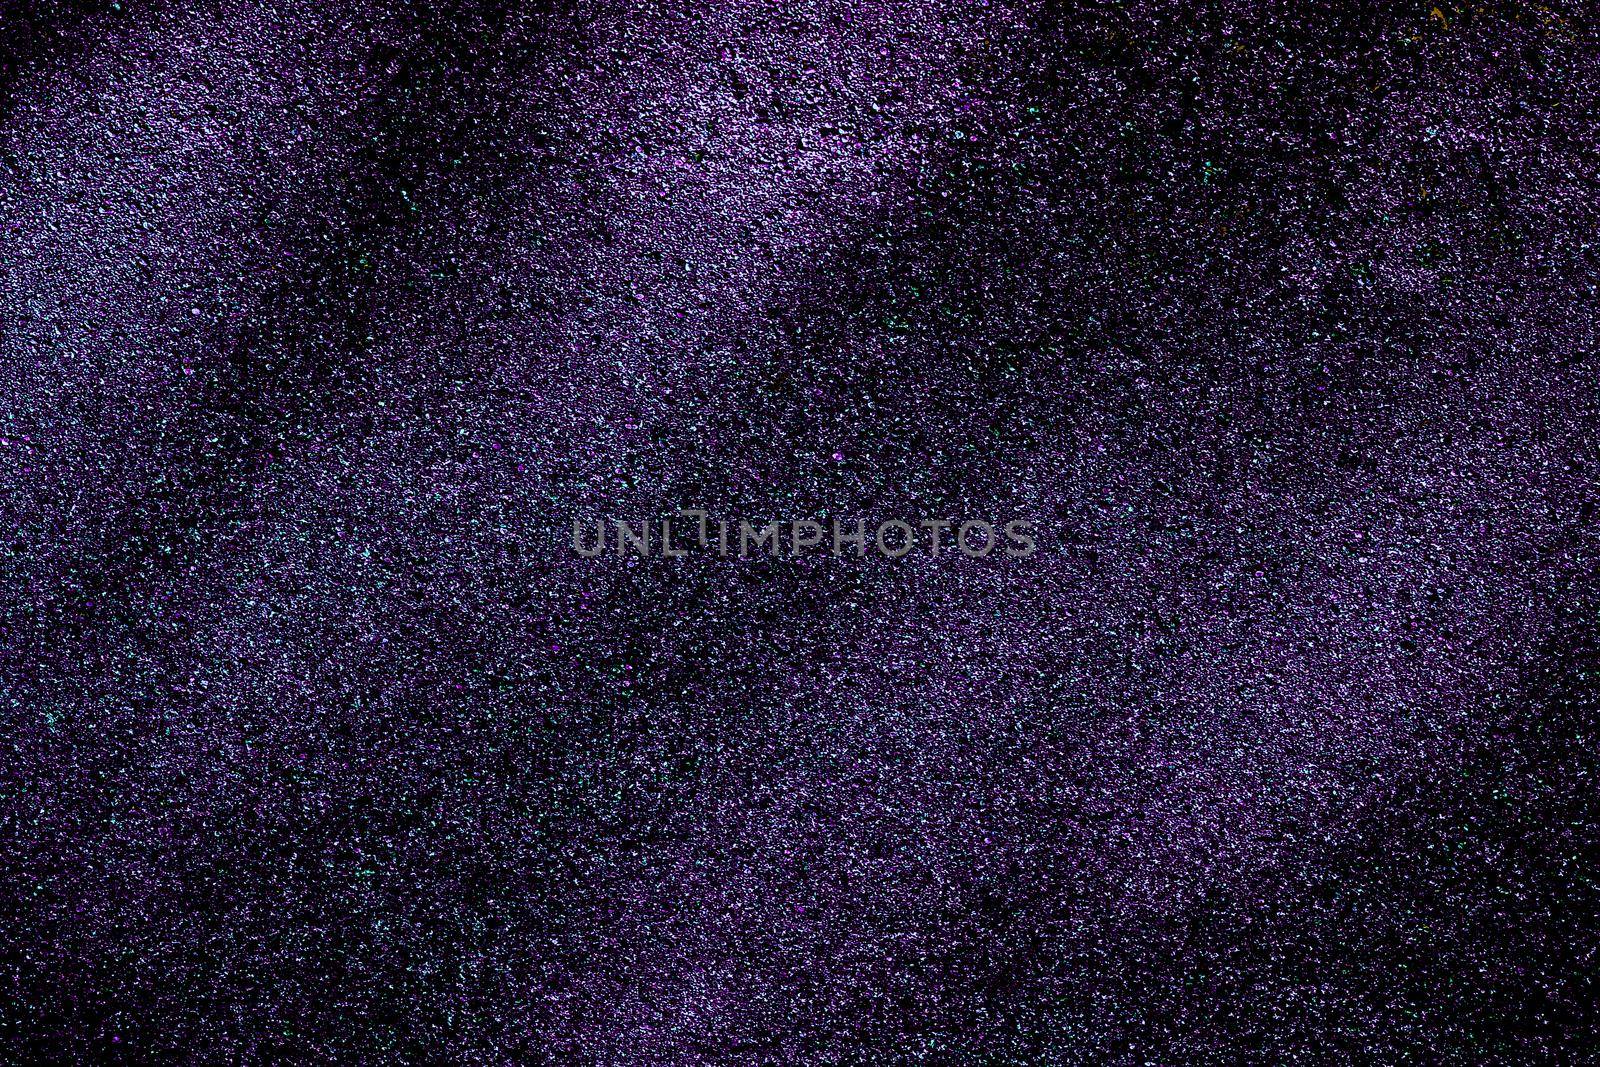 Purple violet background with light spots for decor by jovani68